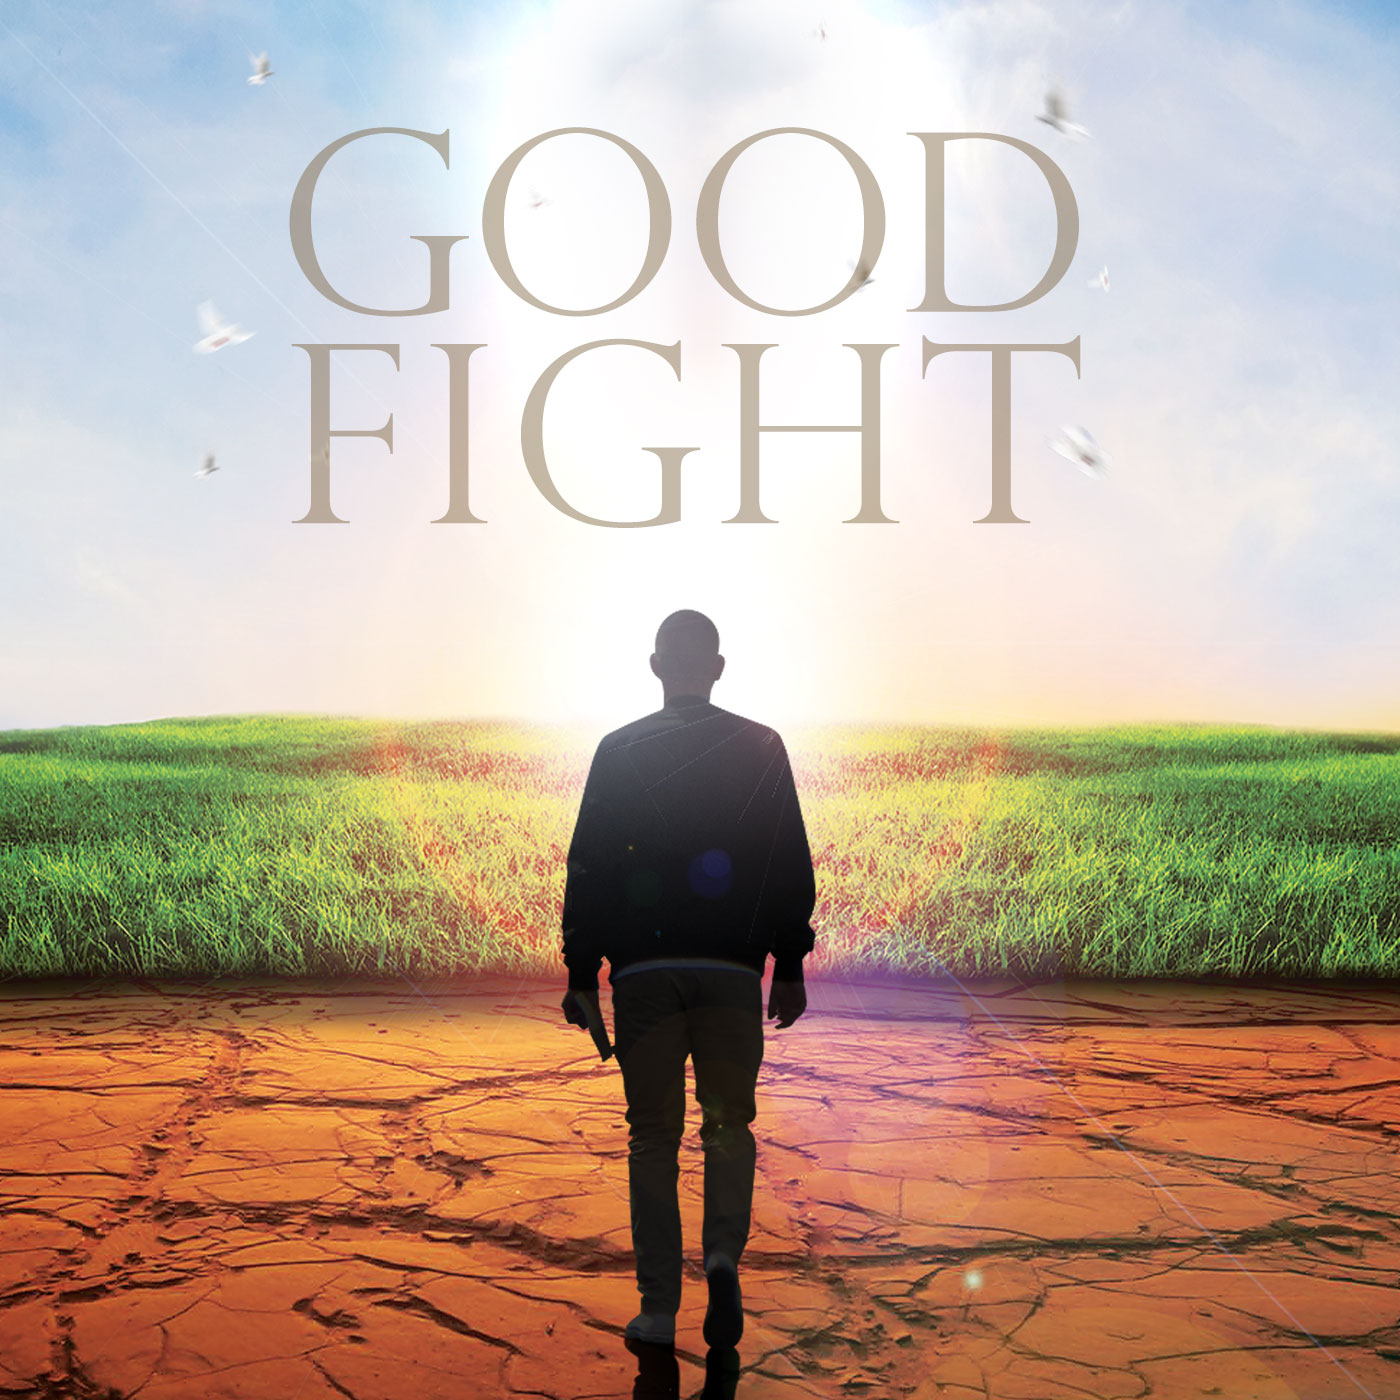 Good Fight - Faithful Under Pressure - Chris Wall - 3-3-2019